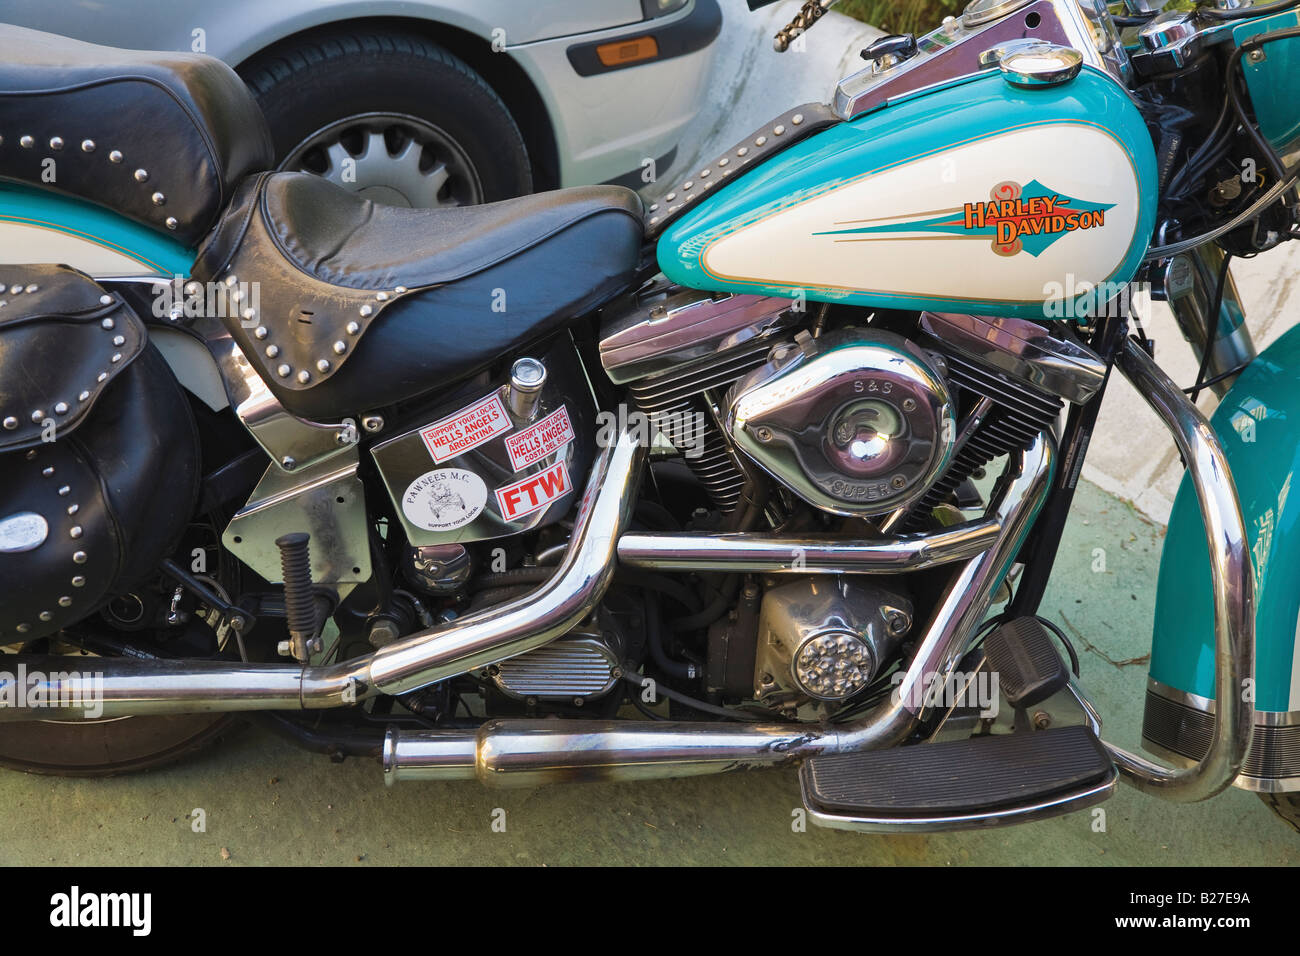 Harley Davidson motorbike with Hell s Angels club stickers Stock Photo -  Alamy